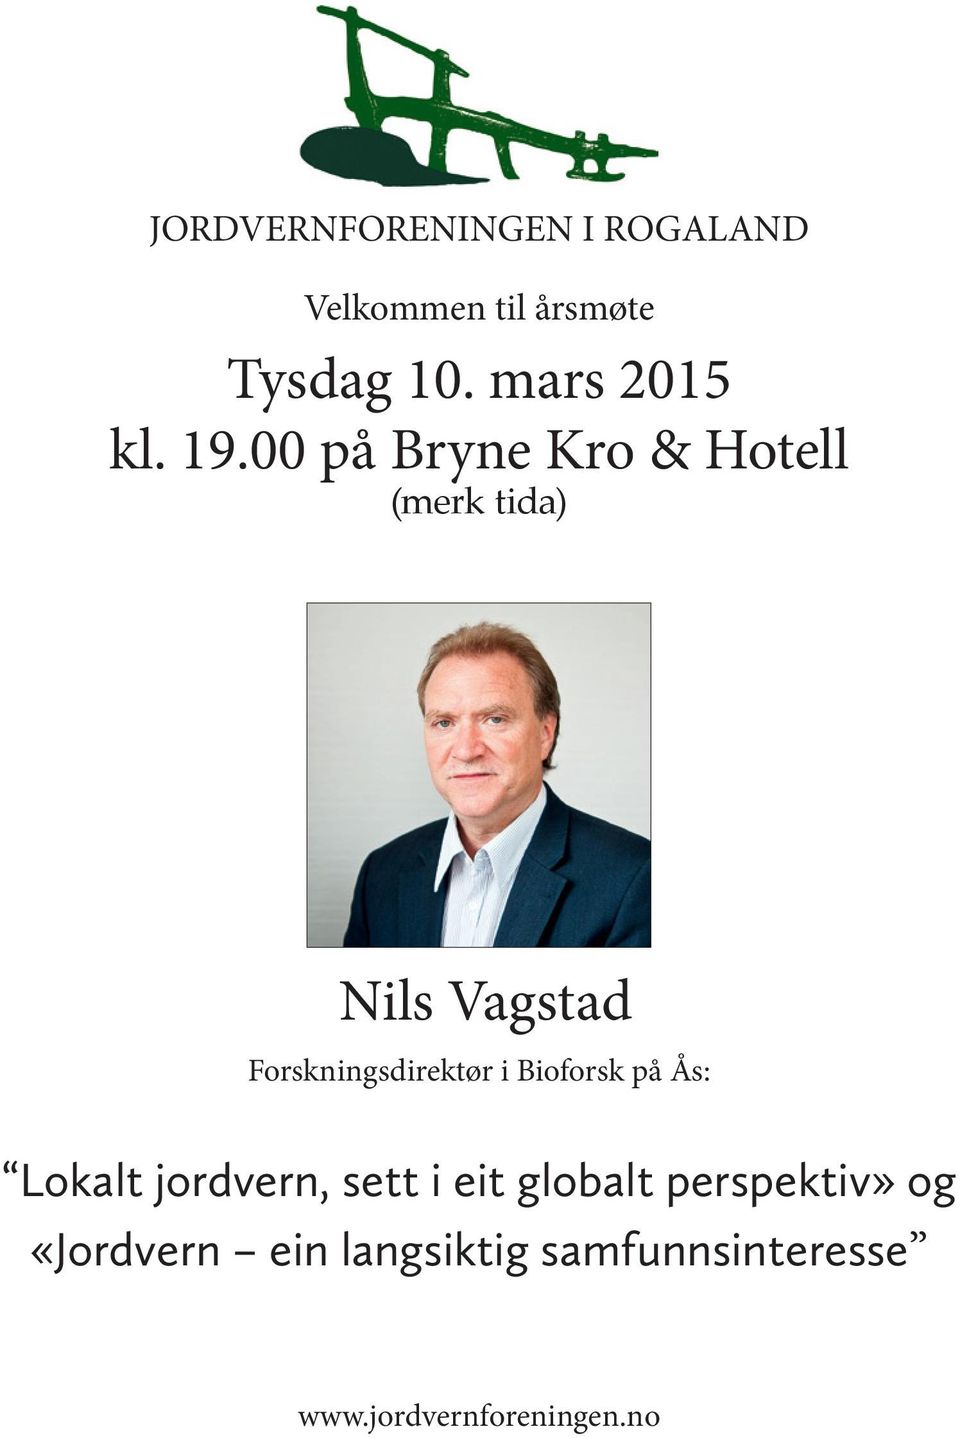 00 på Bryne Kro & Hotell (merk tida) Nils Vagstad Forskningsdirektør i